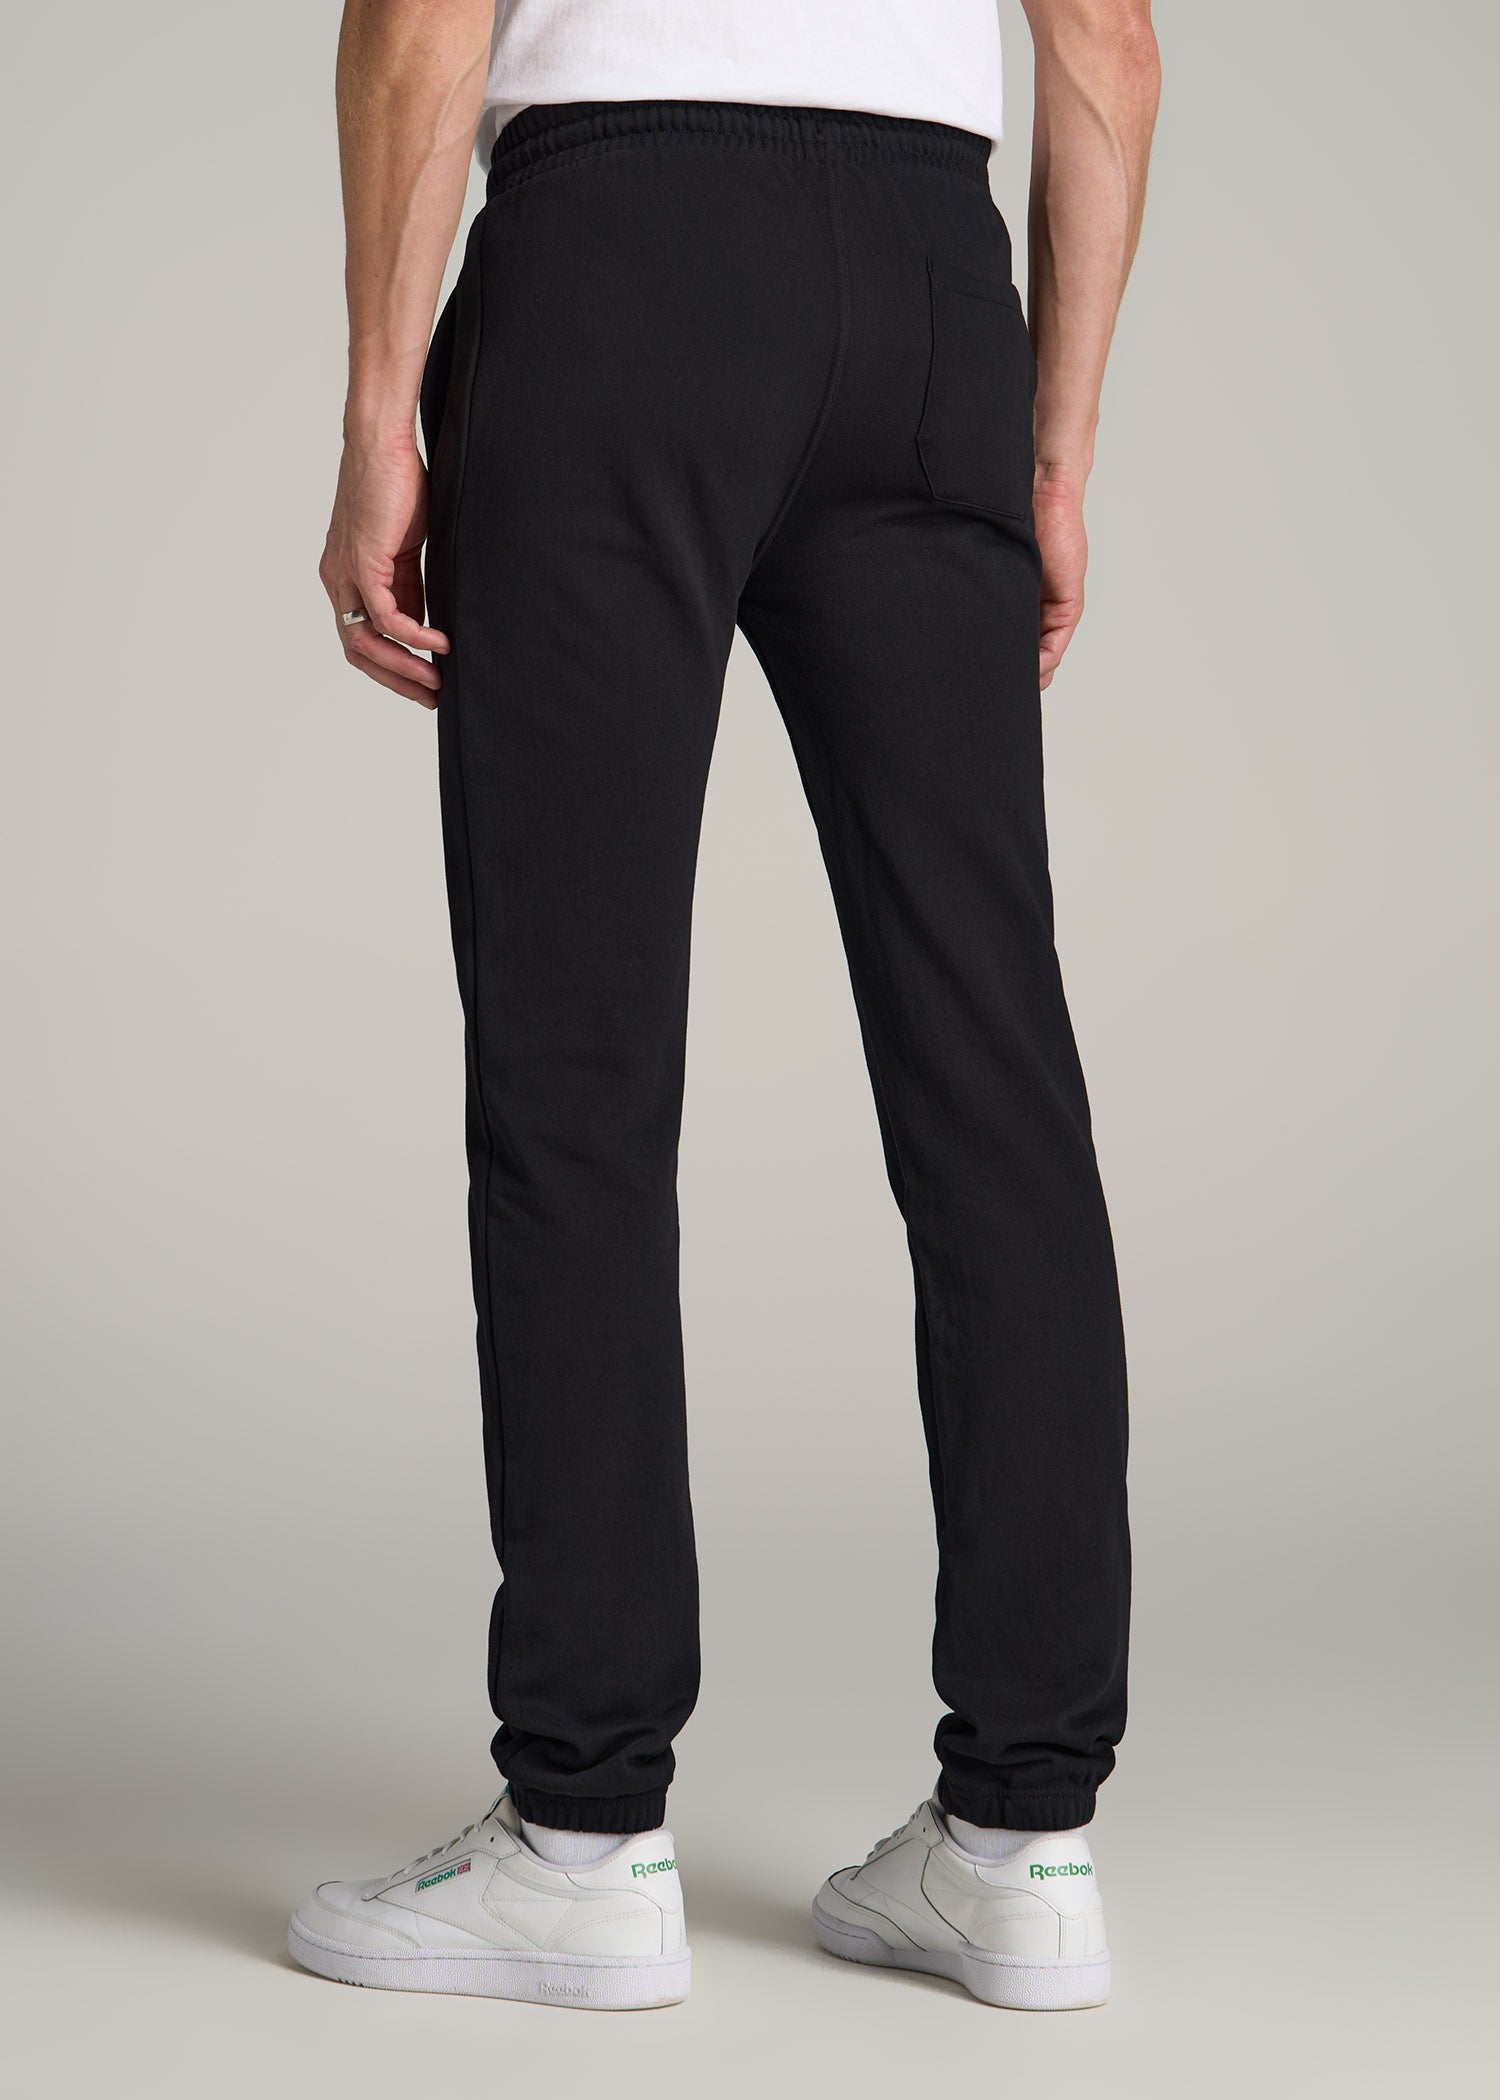 Men's 4 Pocket Fleece Sweatpants, S-XL, Black